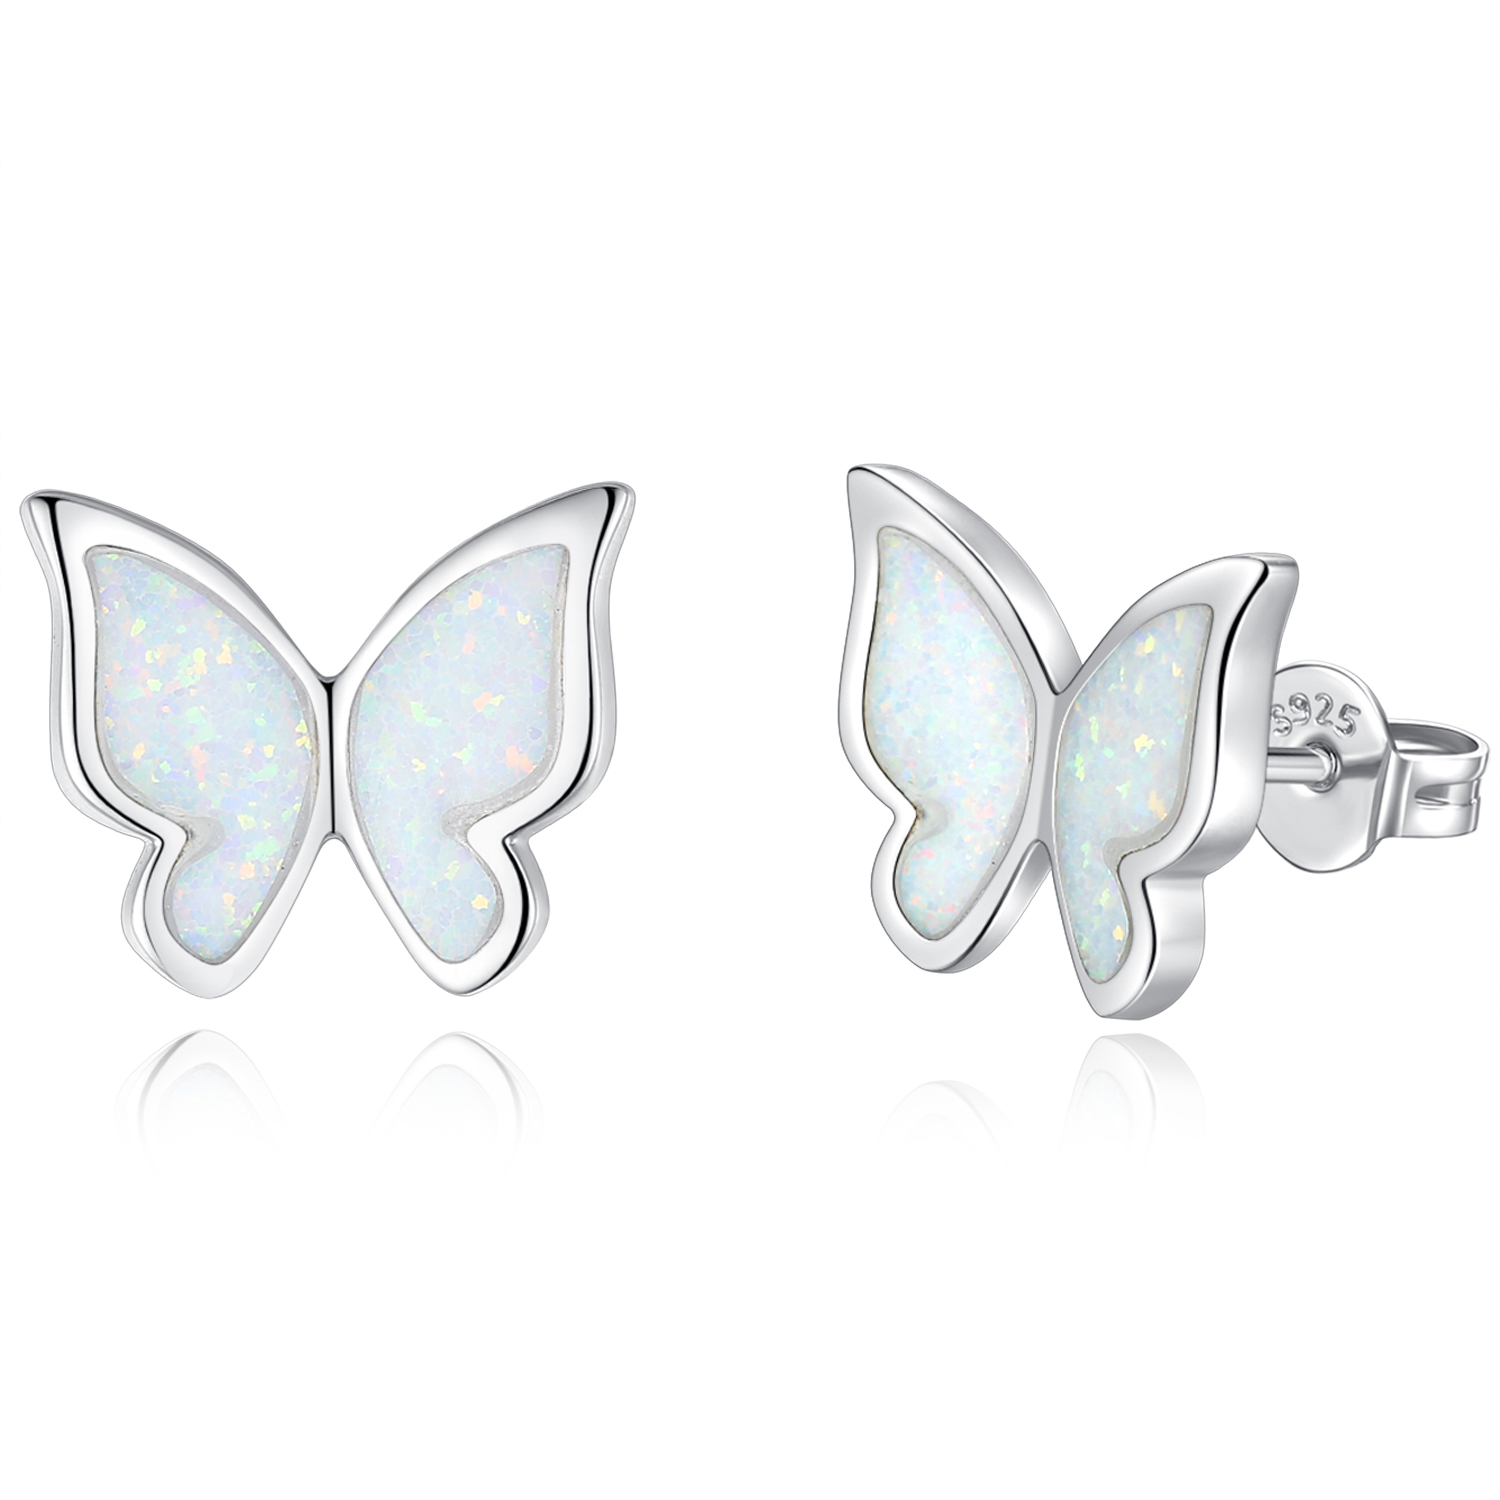 Odm Sterling Silver Earrings Manufacturer | Merryshine